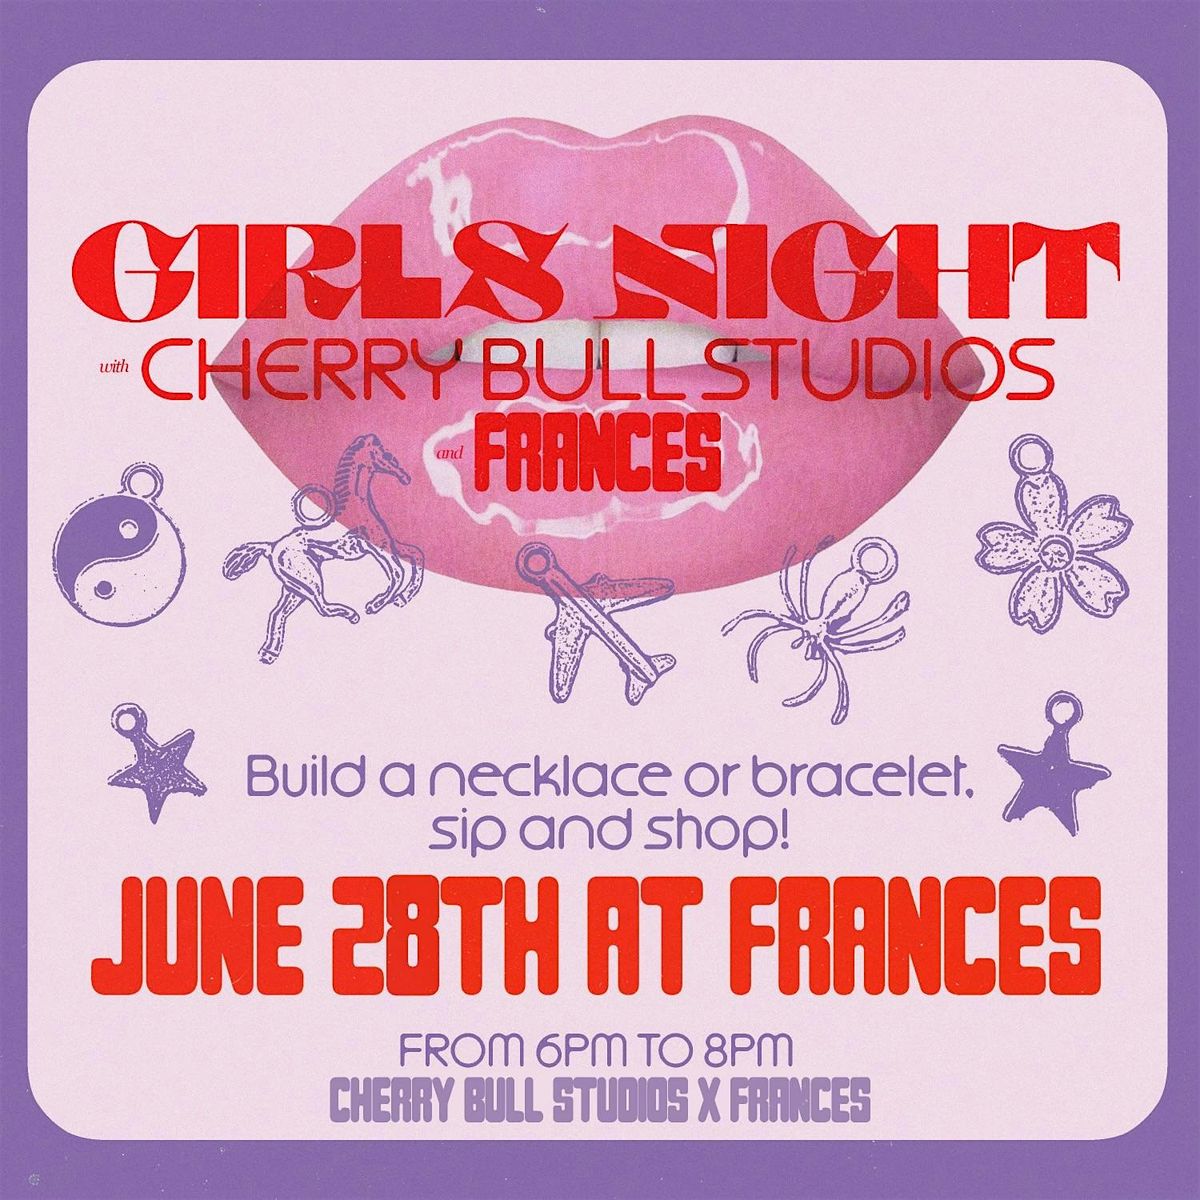 Girls Night with Cherry Bull Studios & Frances